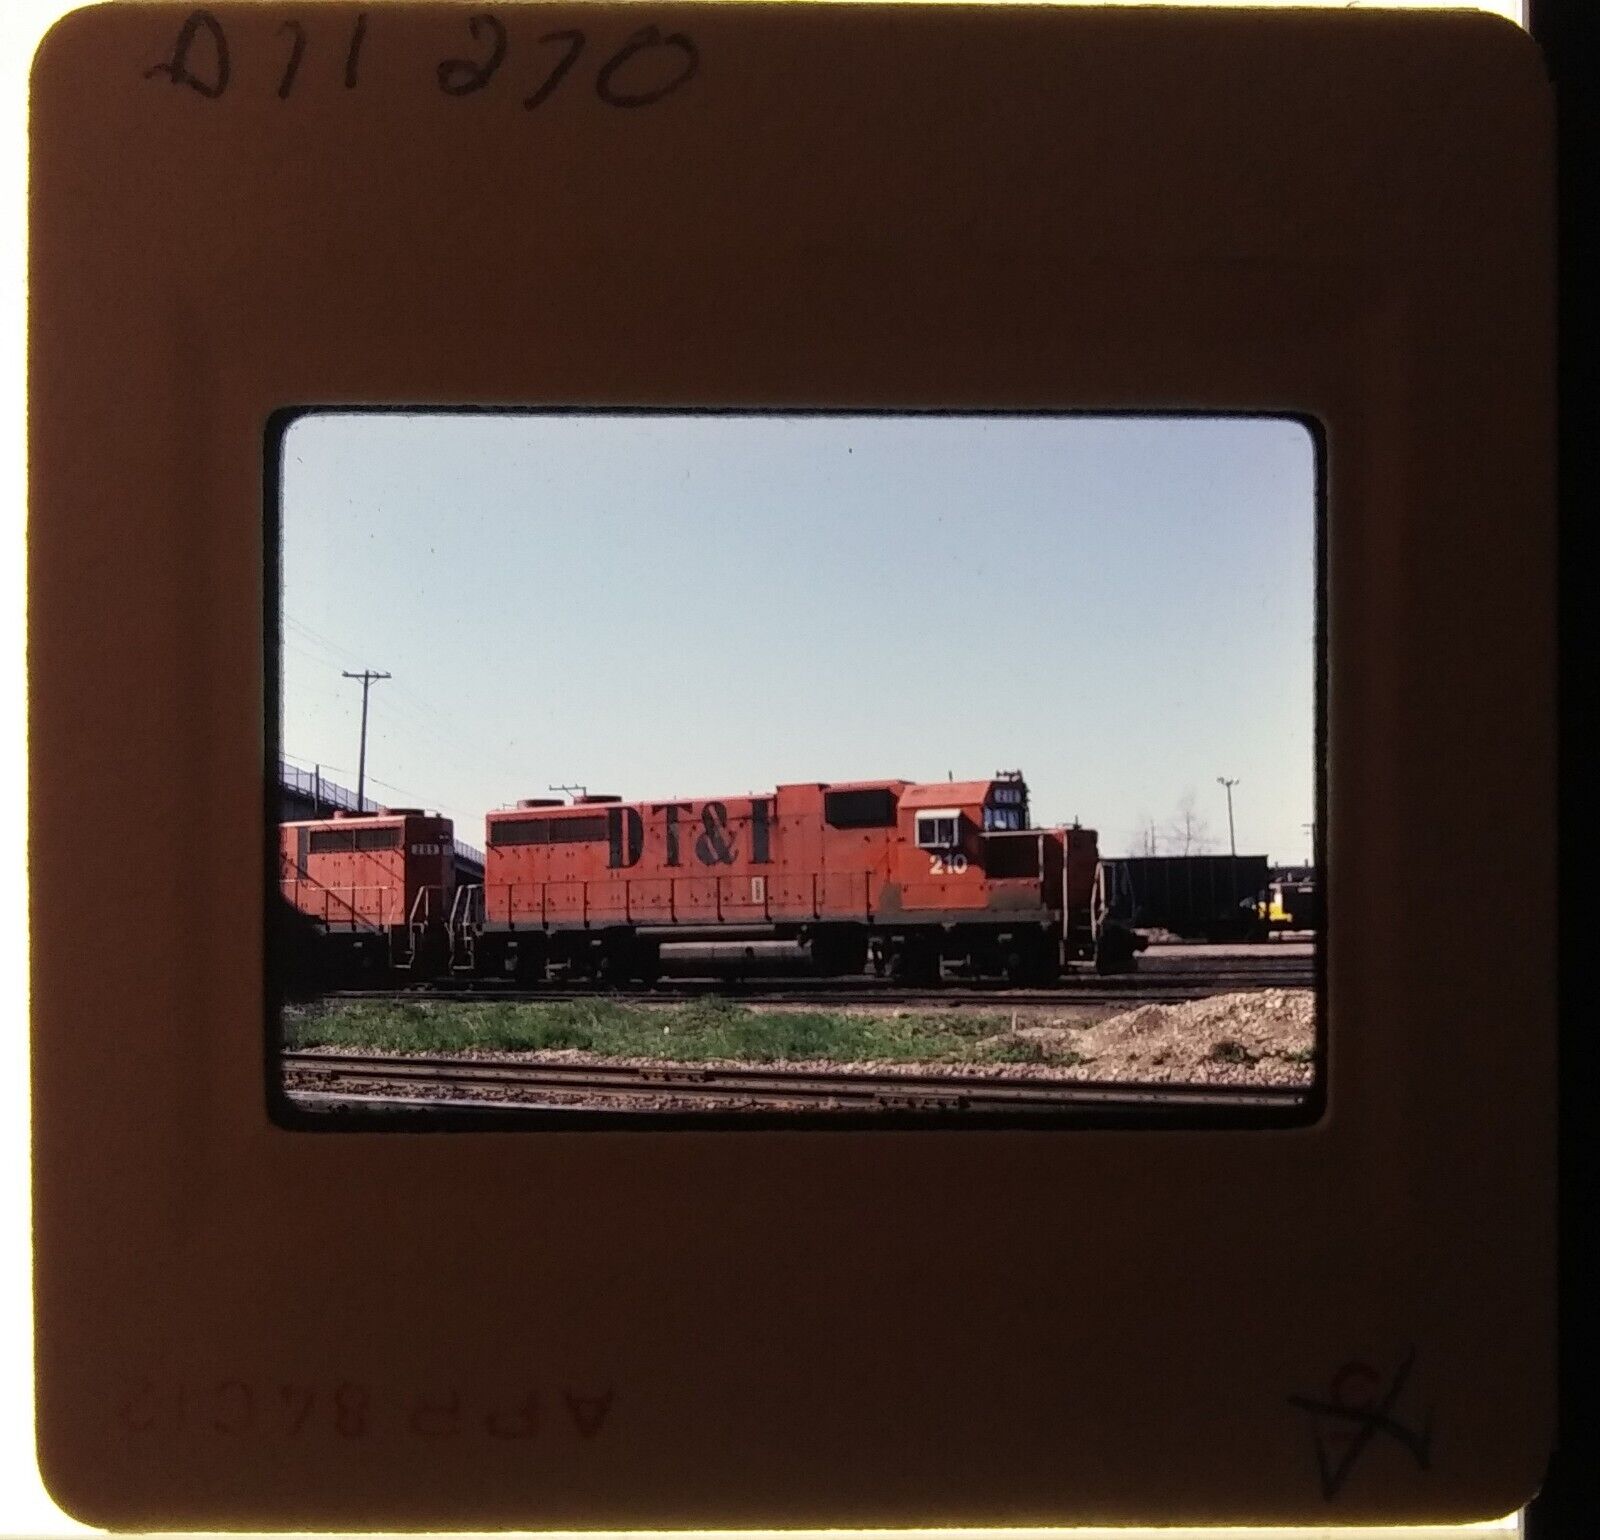 Orig Slide Detroit Toledo & Ironton DT&I GP38 270 Unknown Location April 1984